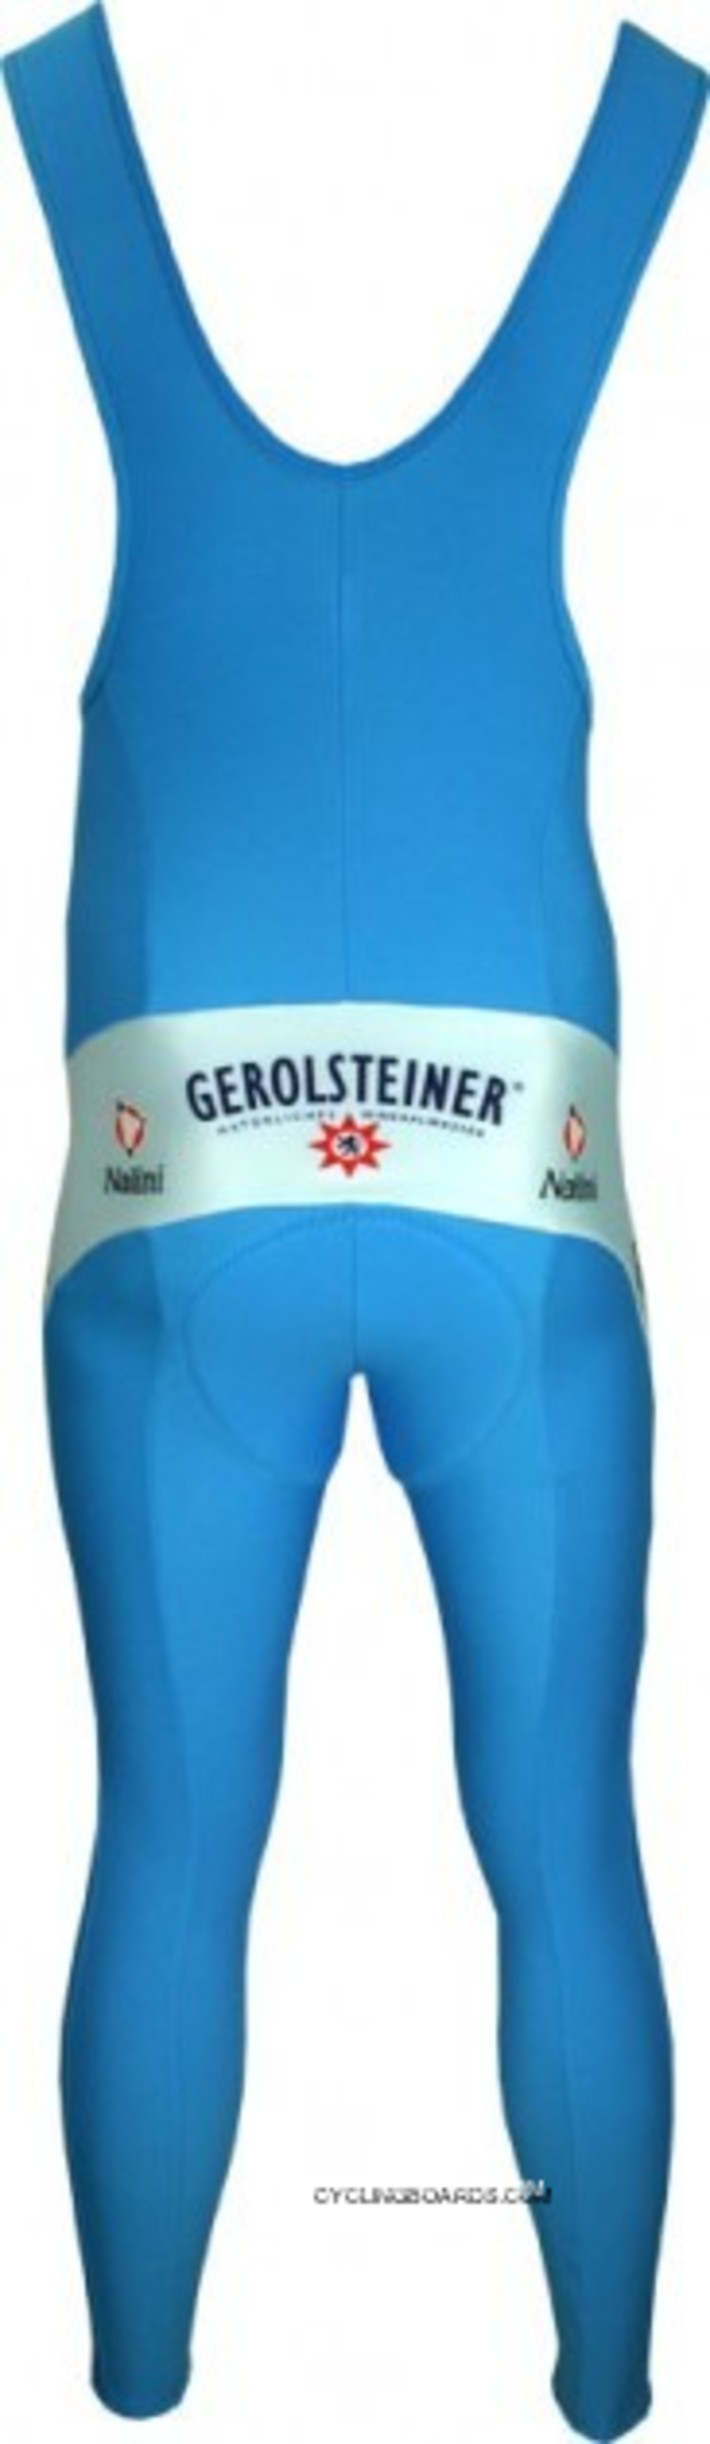 Gerolsteiner 2006 Radsport-Profi-Team Winter Fleece Bib Tights Tj-434-7873 New Release